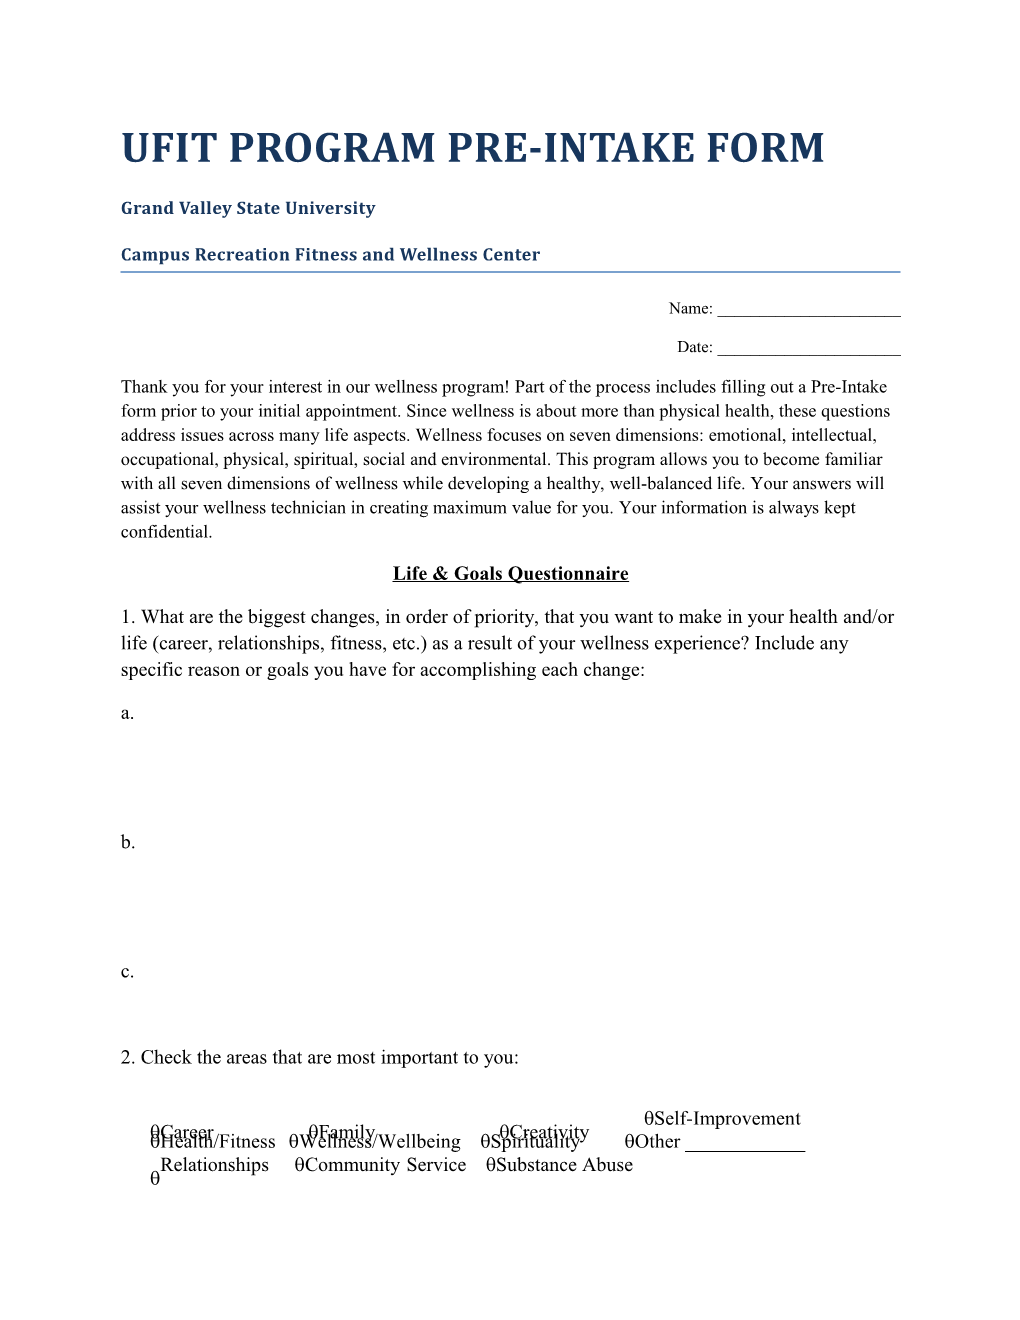 Ufit Program Pre-Intake Form